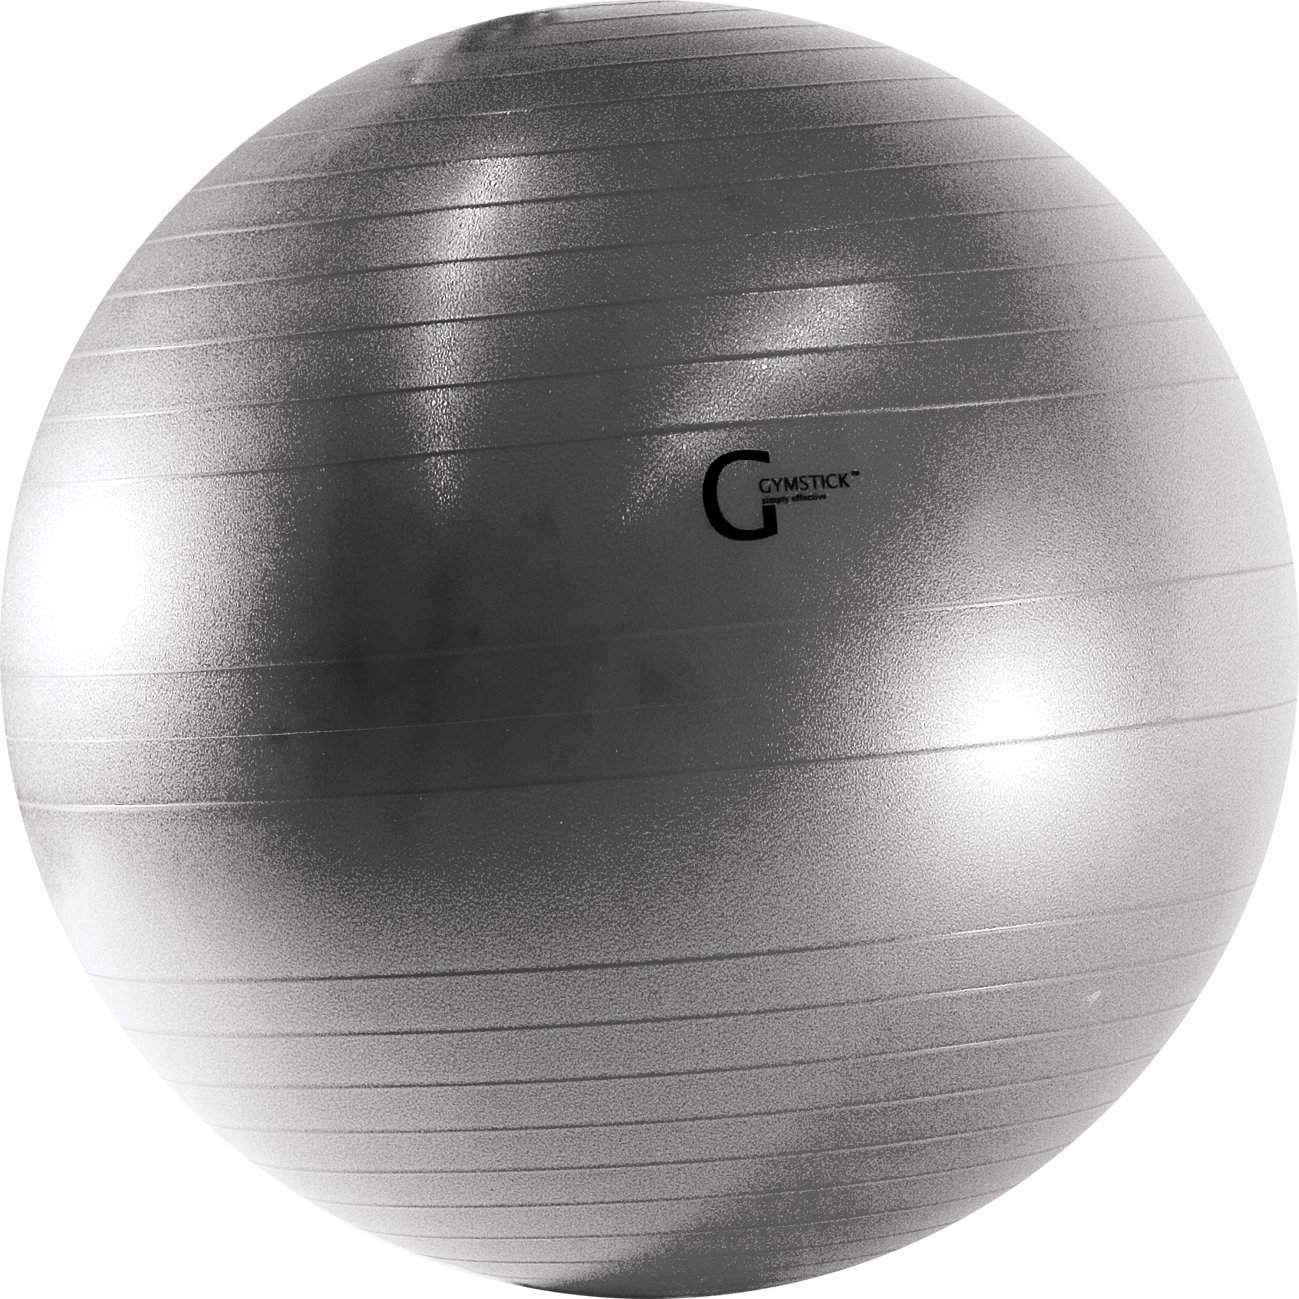 GYMSTICK – Gymnastikball, Balance-Ball, Fitnessball | Durchmesser: 55 cm Grau